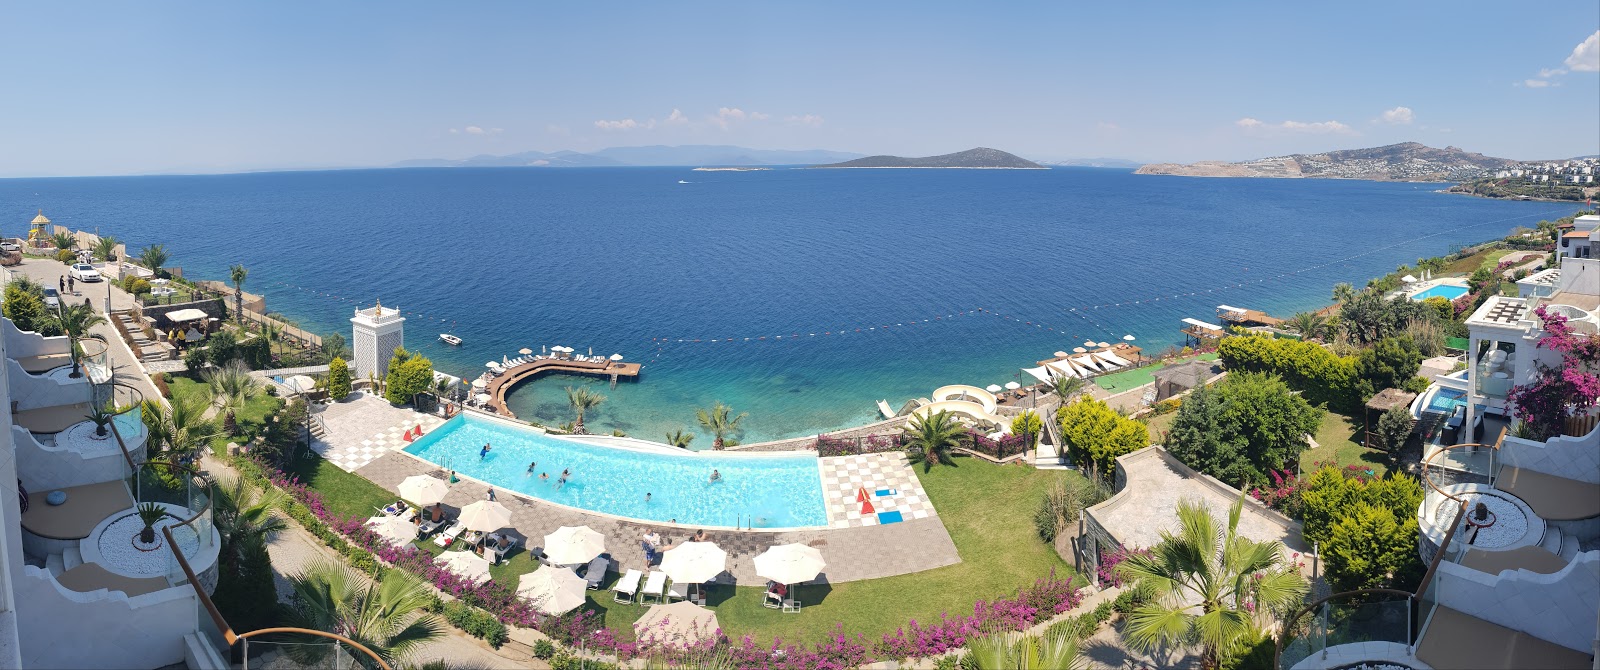 Foto van Bvs Bosphorus Resort met turquoise puur water oppervlakte